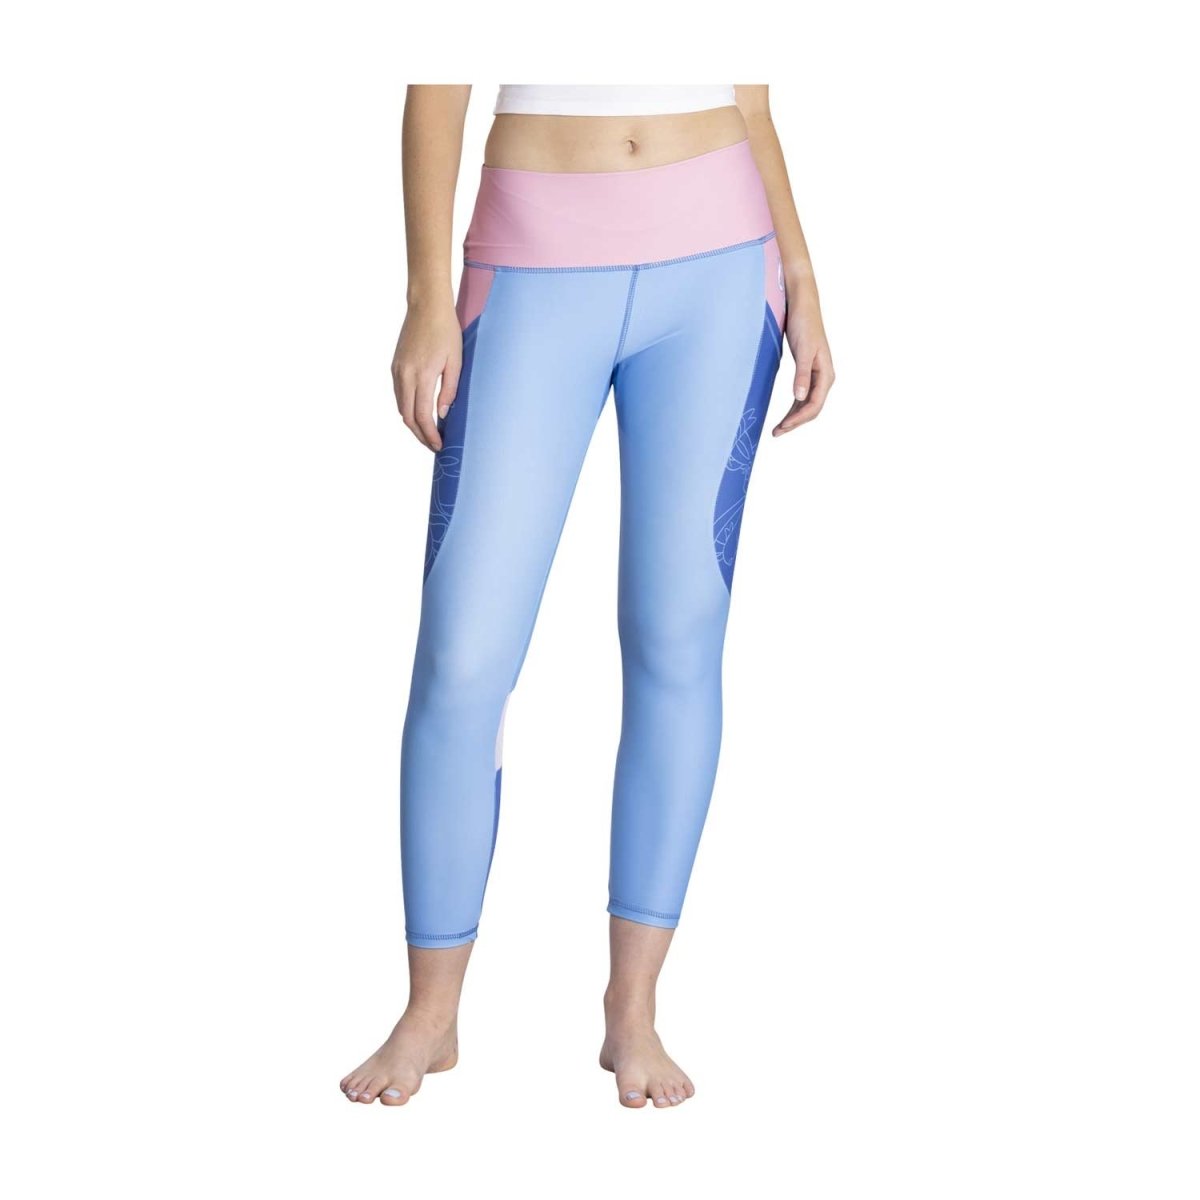 Sylveon Pink & Blue 7/8 Length Leggings - Adult